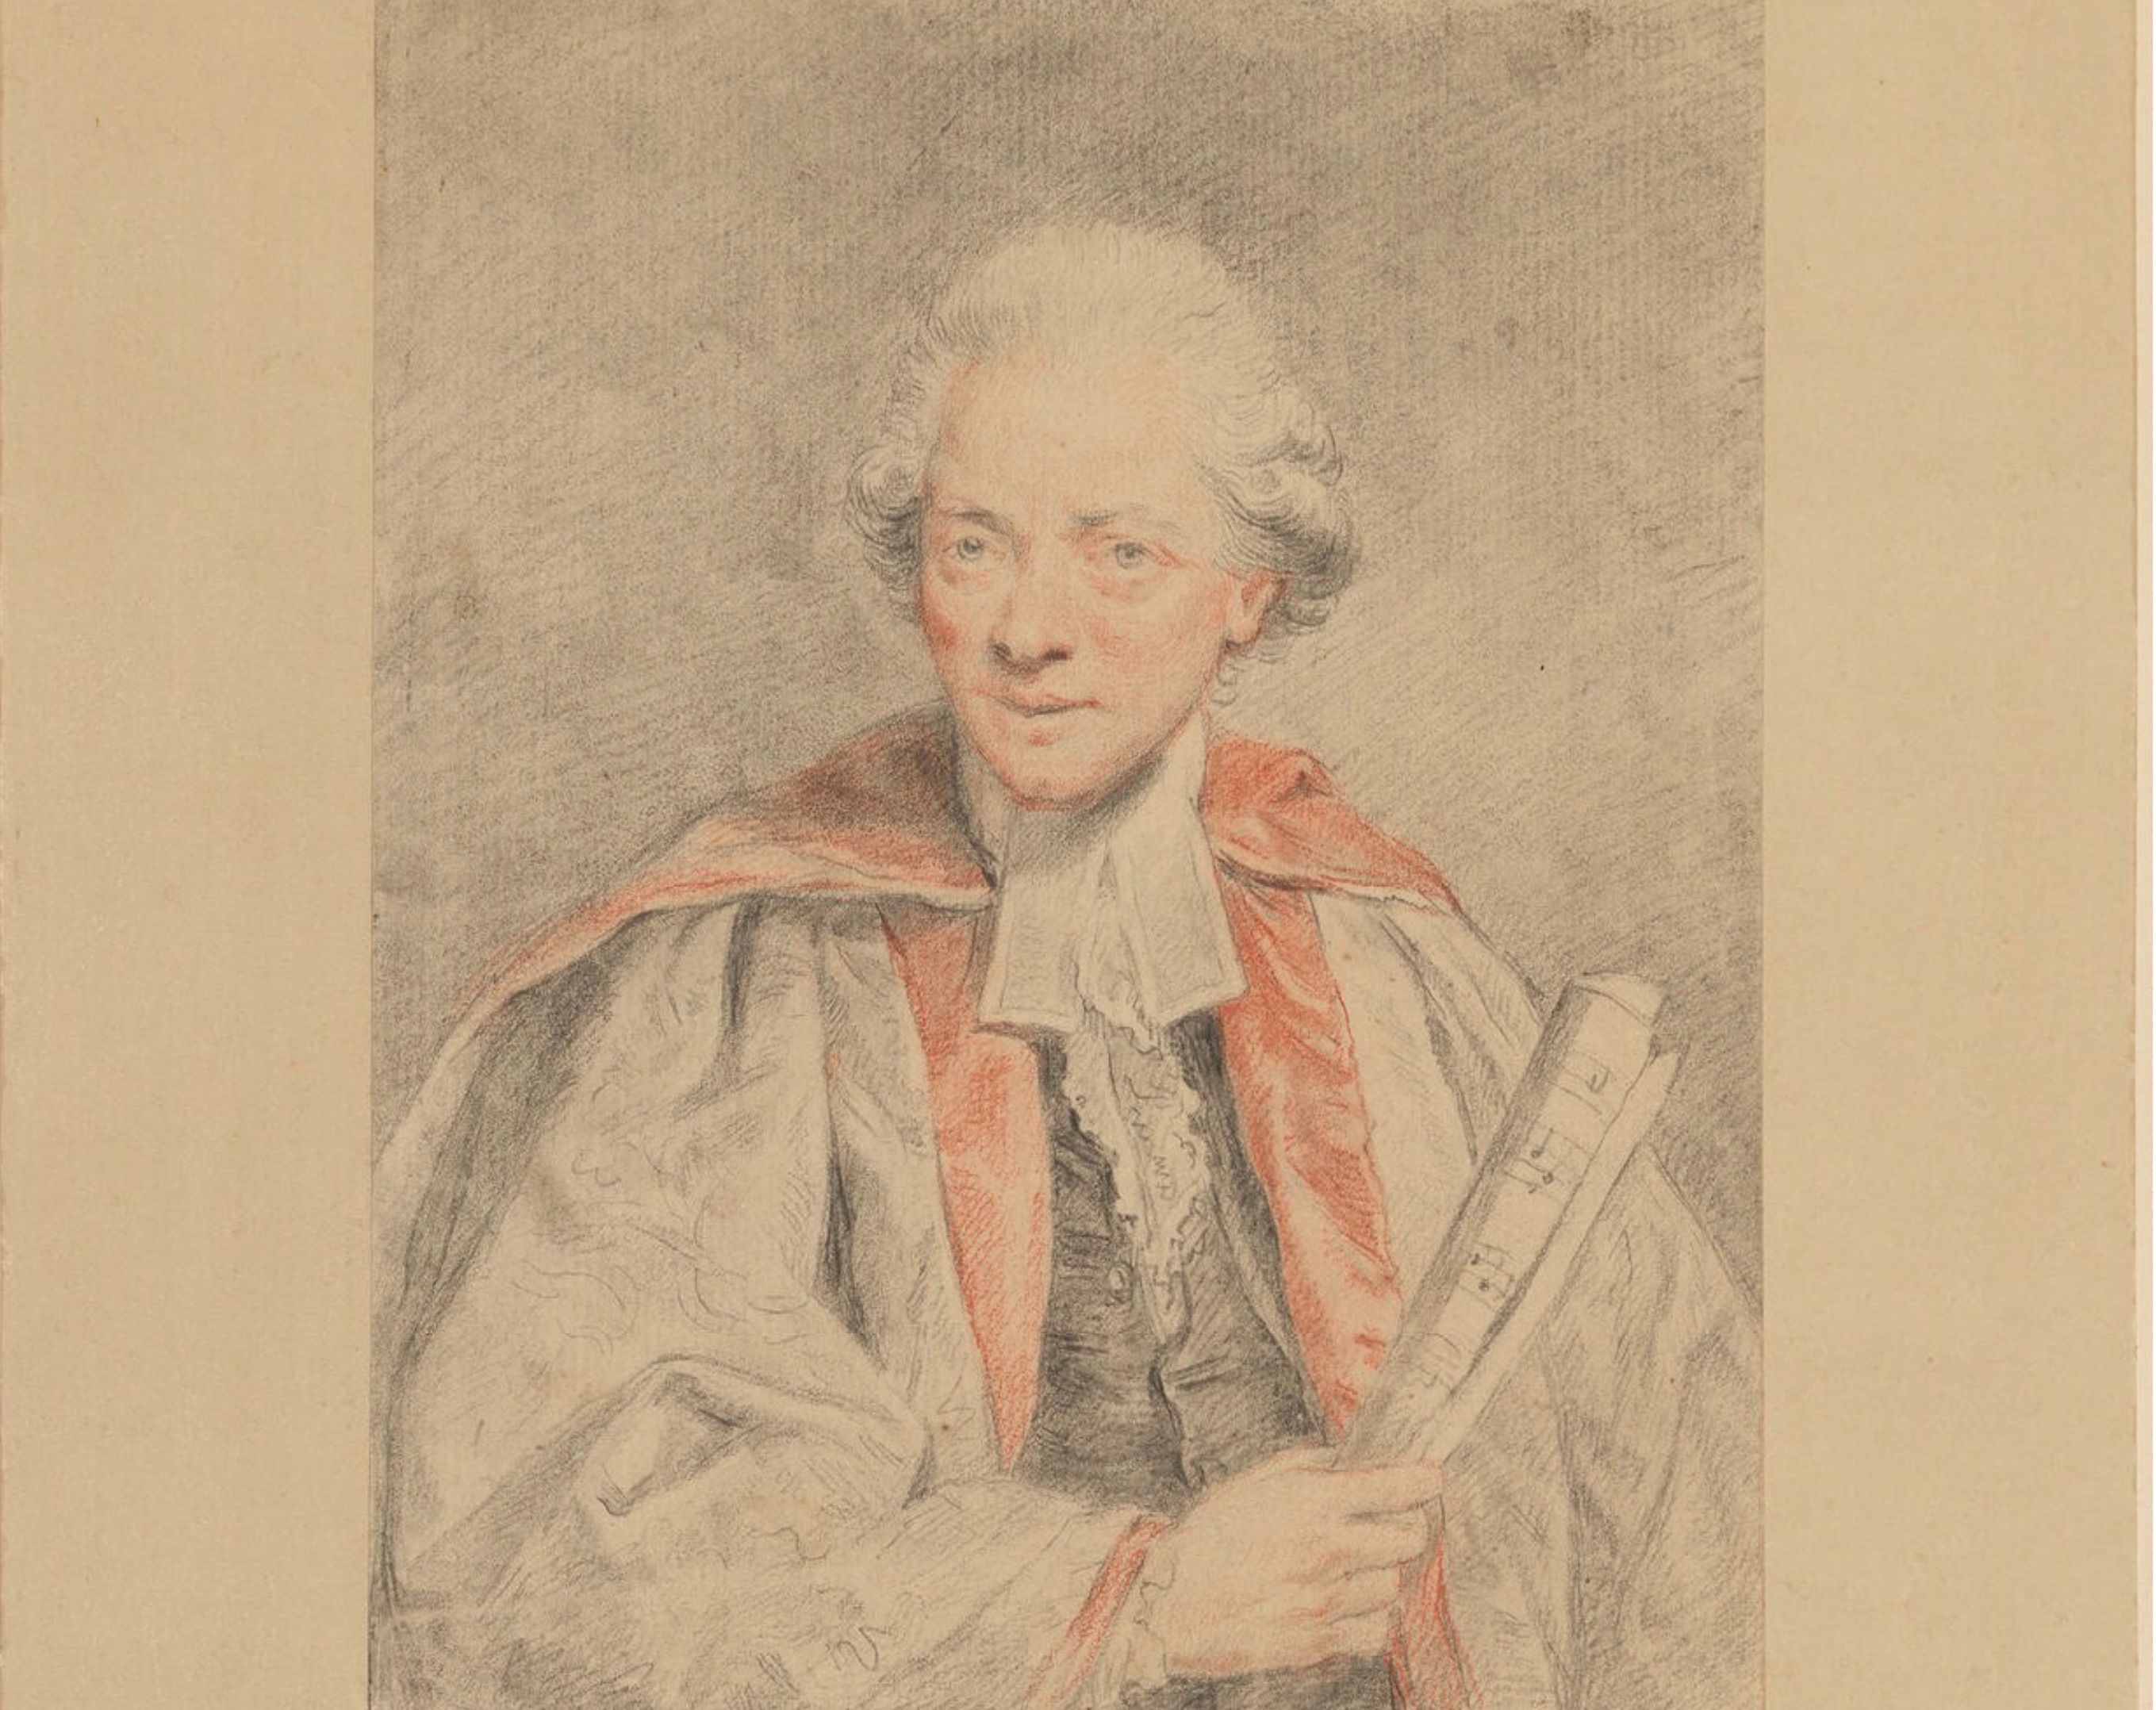 Francesco Bartolozzi, after Sir Joshua Reynolds